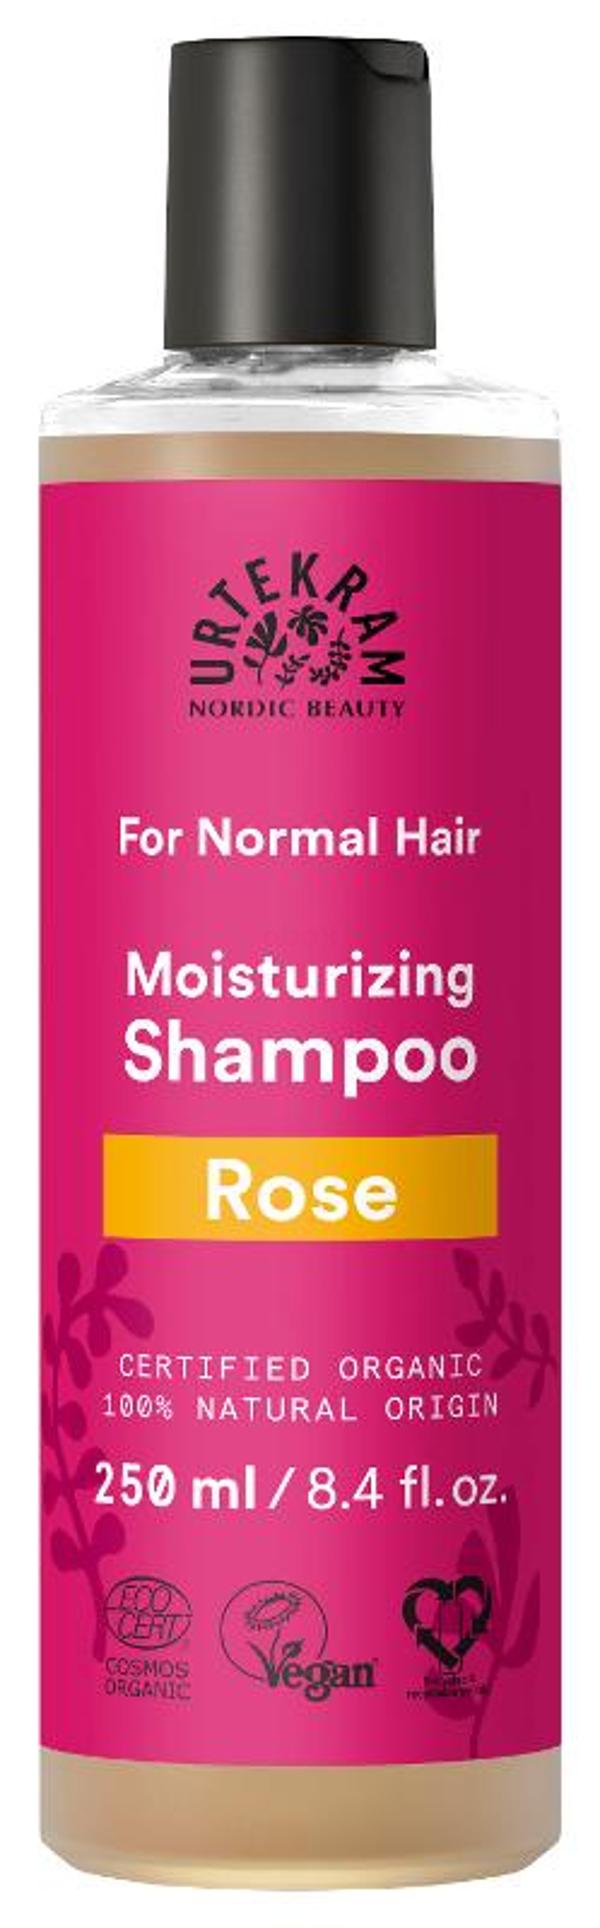 Produktfoto zu Rose Shampoo, normales Haar